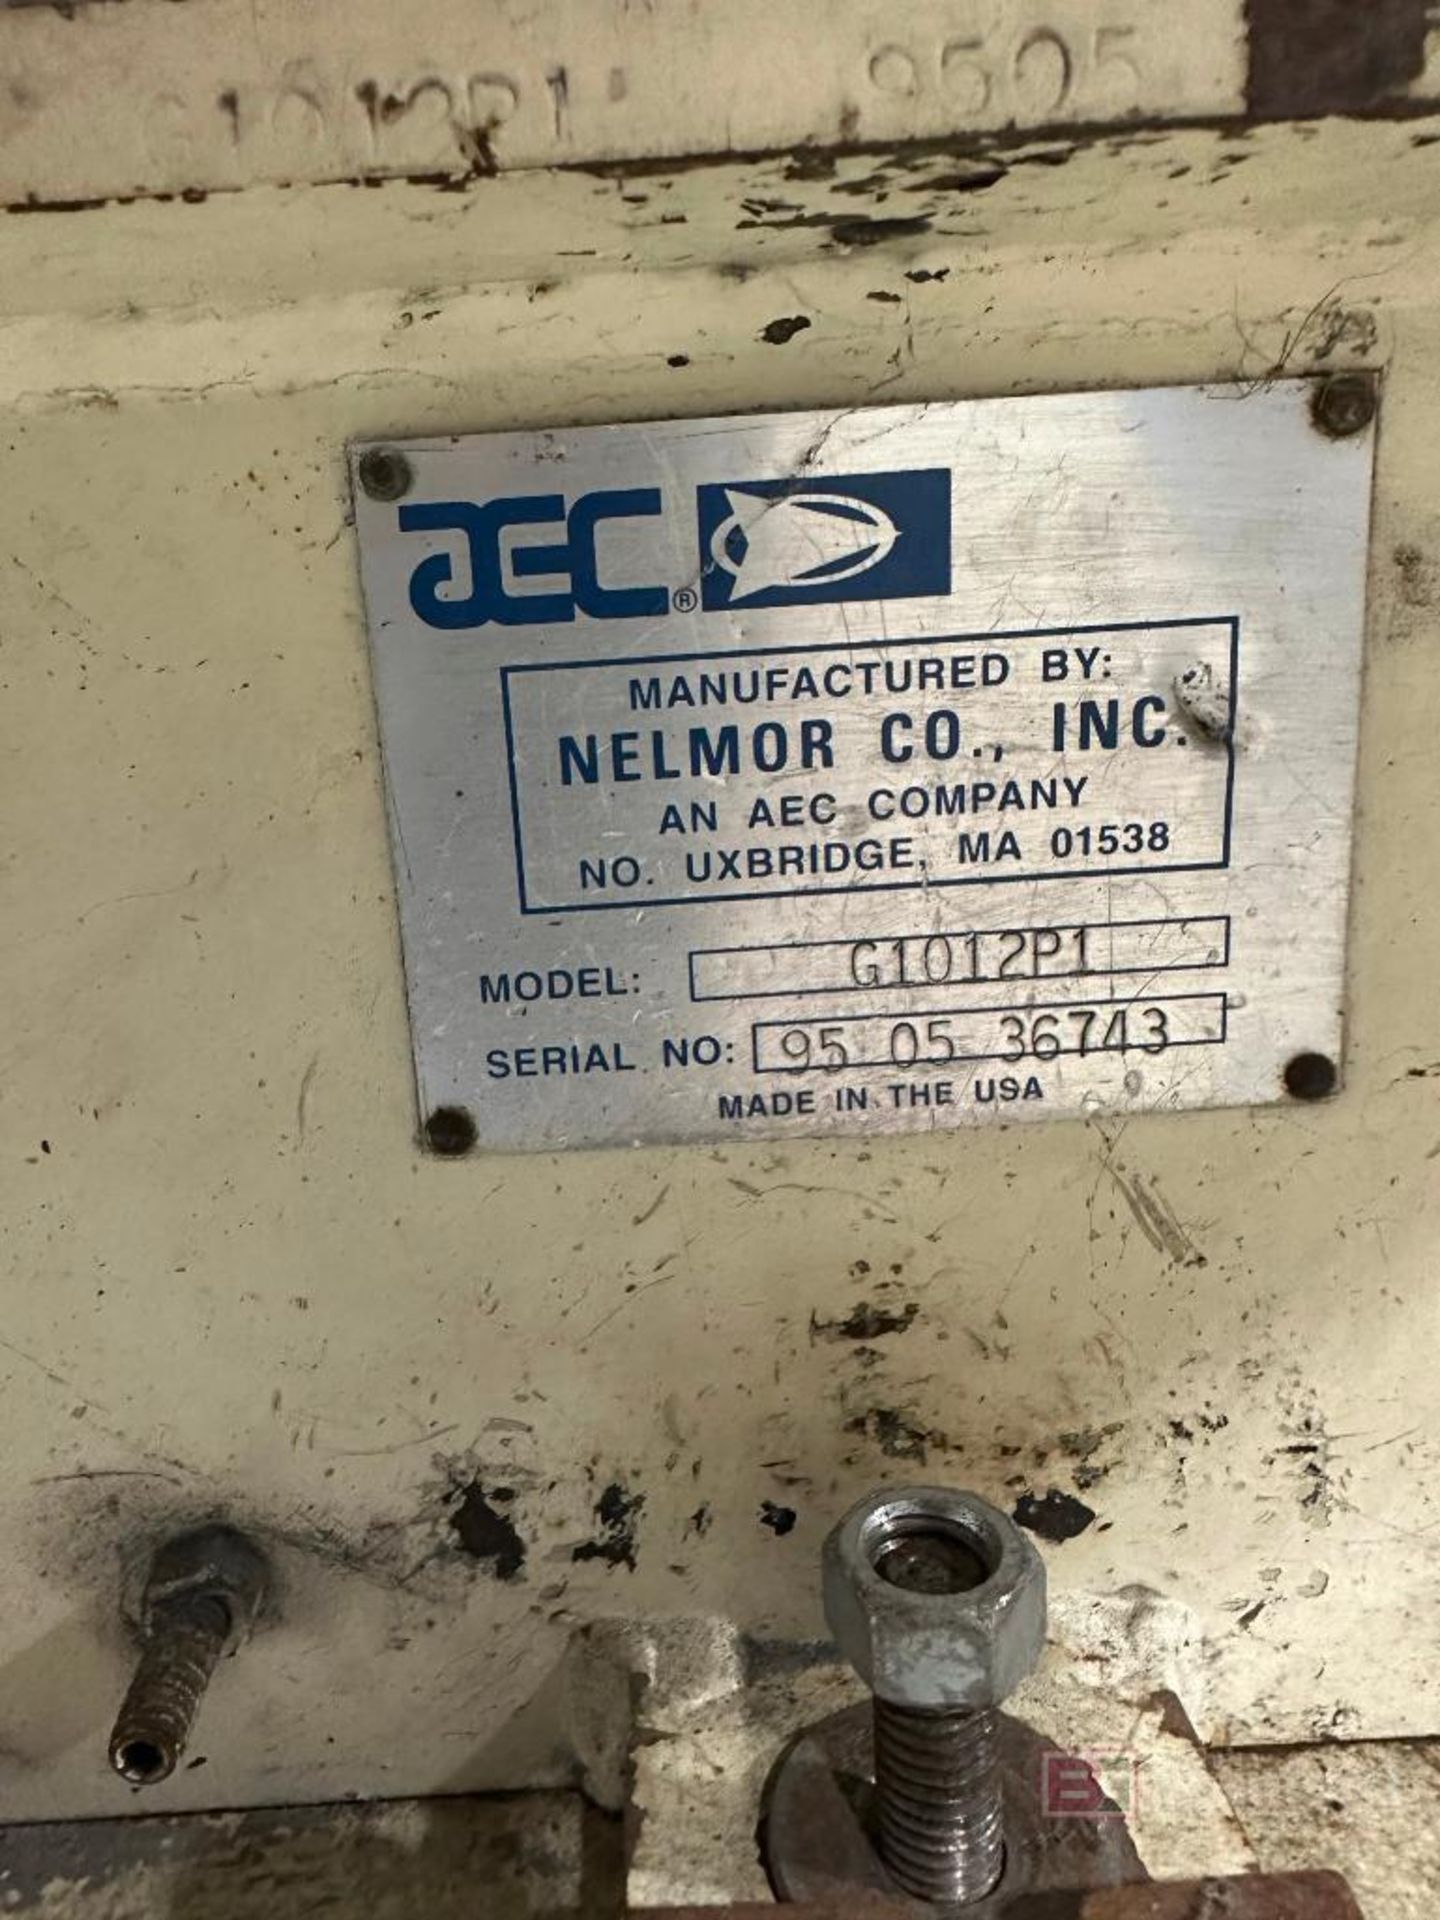 Nelmor G1012P1 Granulator - Image 5 of 5